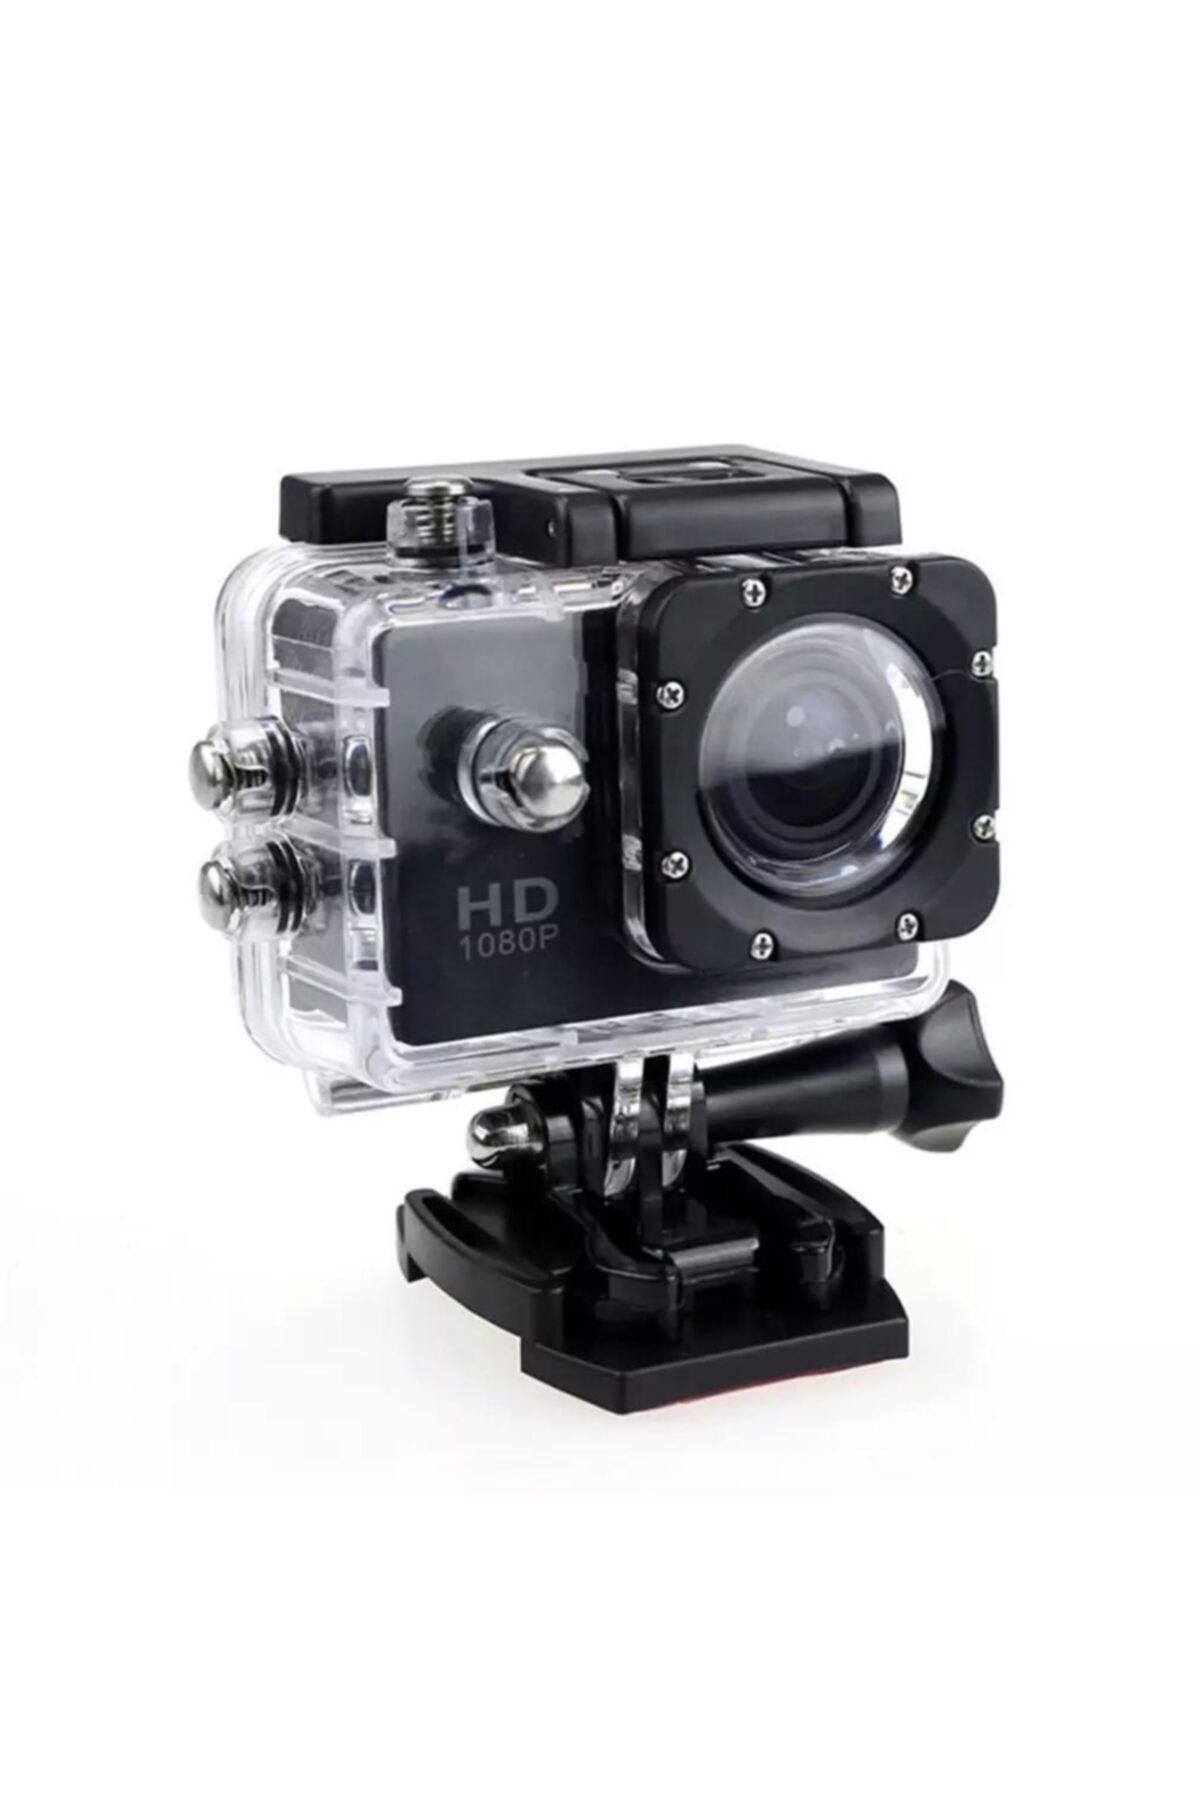 PhoneStore Açık Mini Spor Eylem Kamera Ultra 30m 1080p Sualtı Su Geçirmez Aksiyon Kamerası